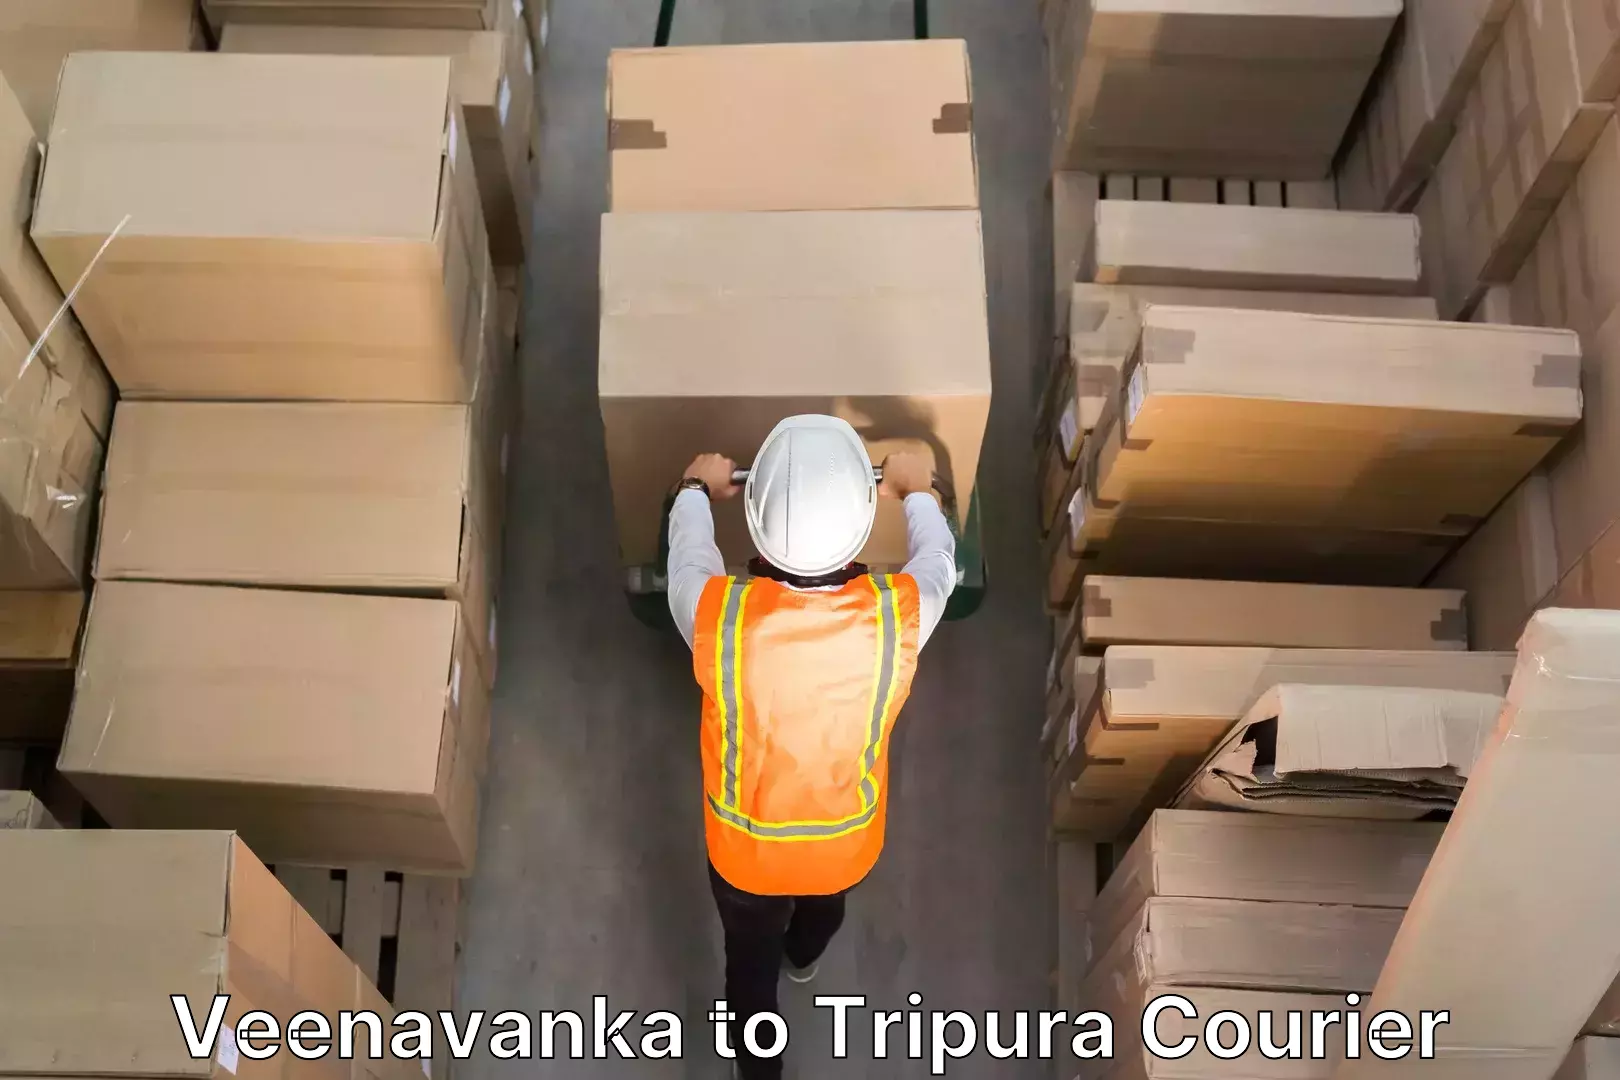 Specialized moving company Veenavanka to Tripura